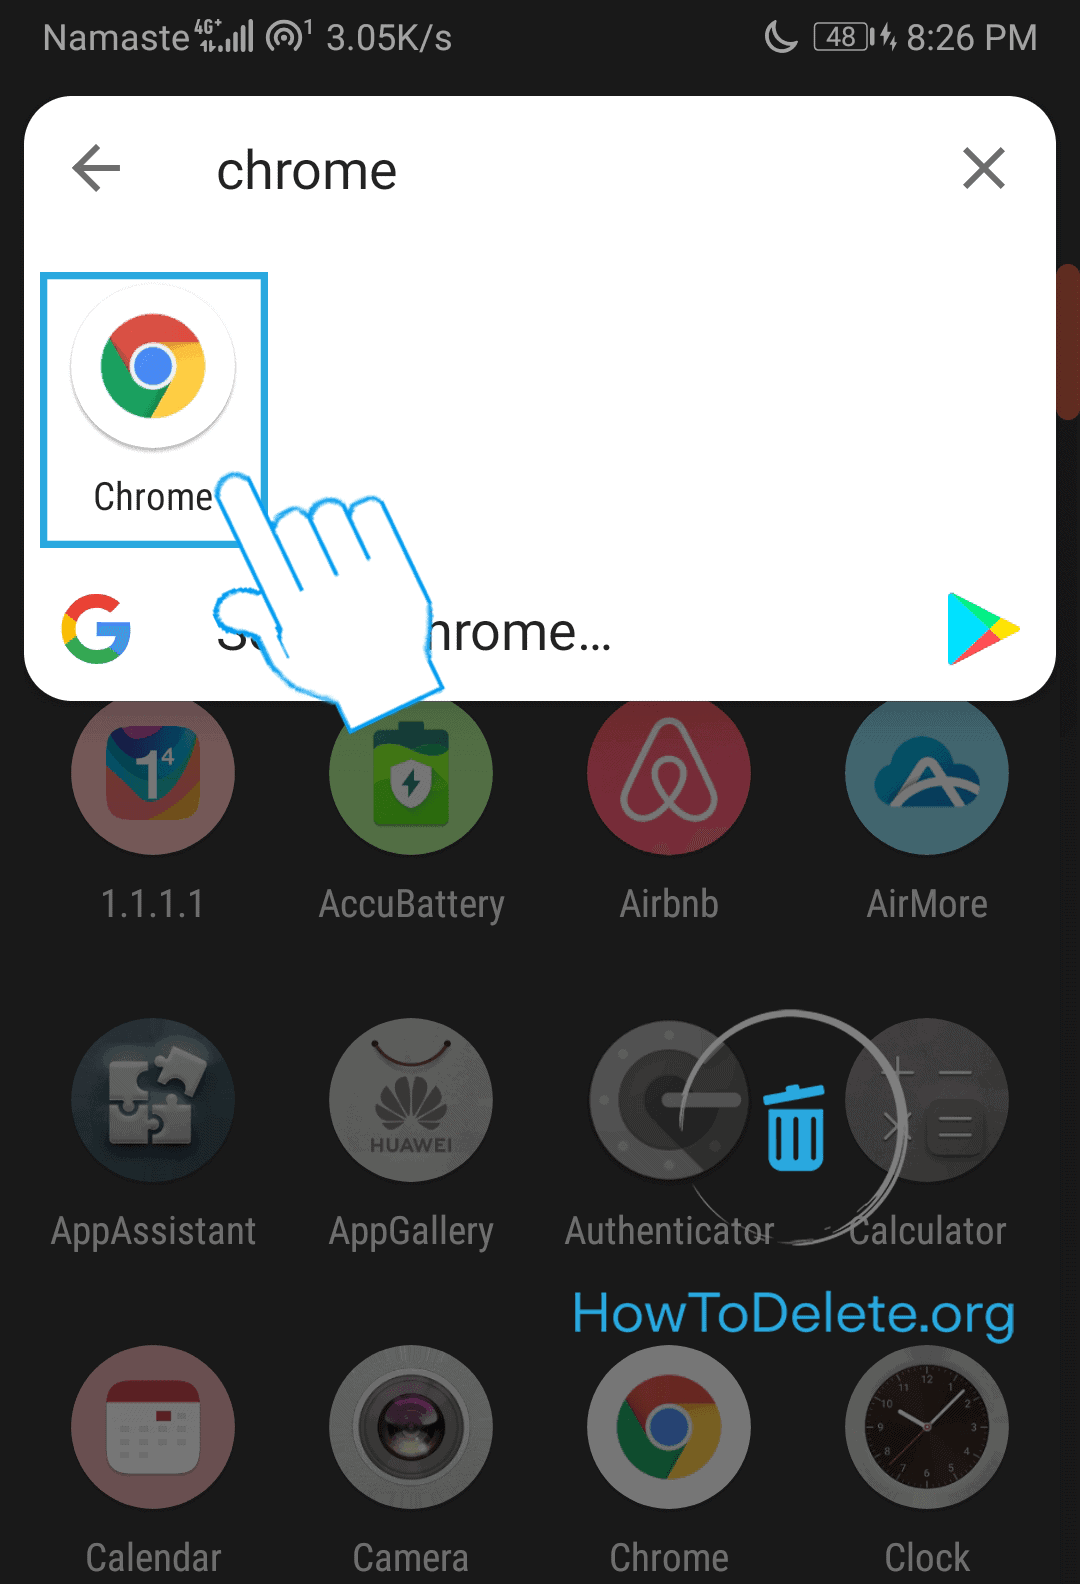 chrome google app